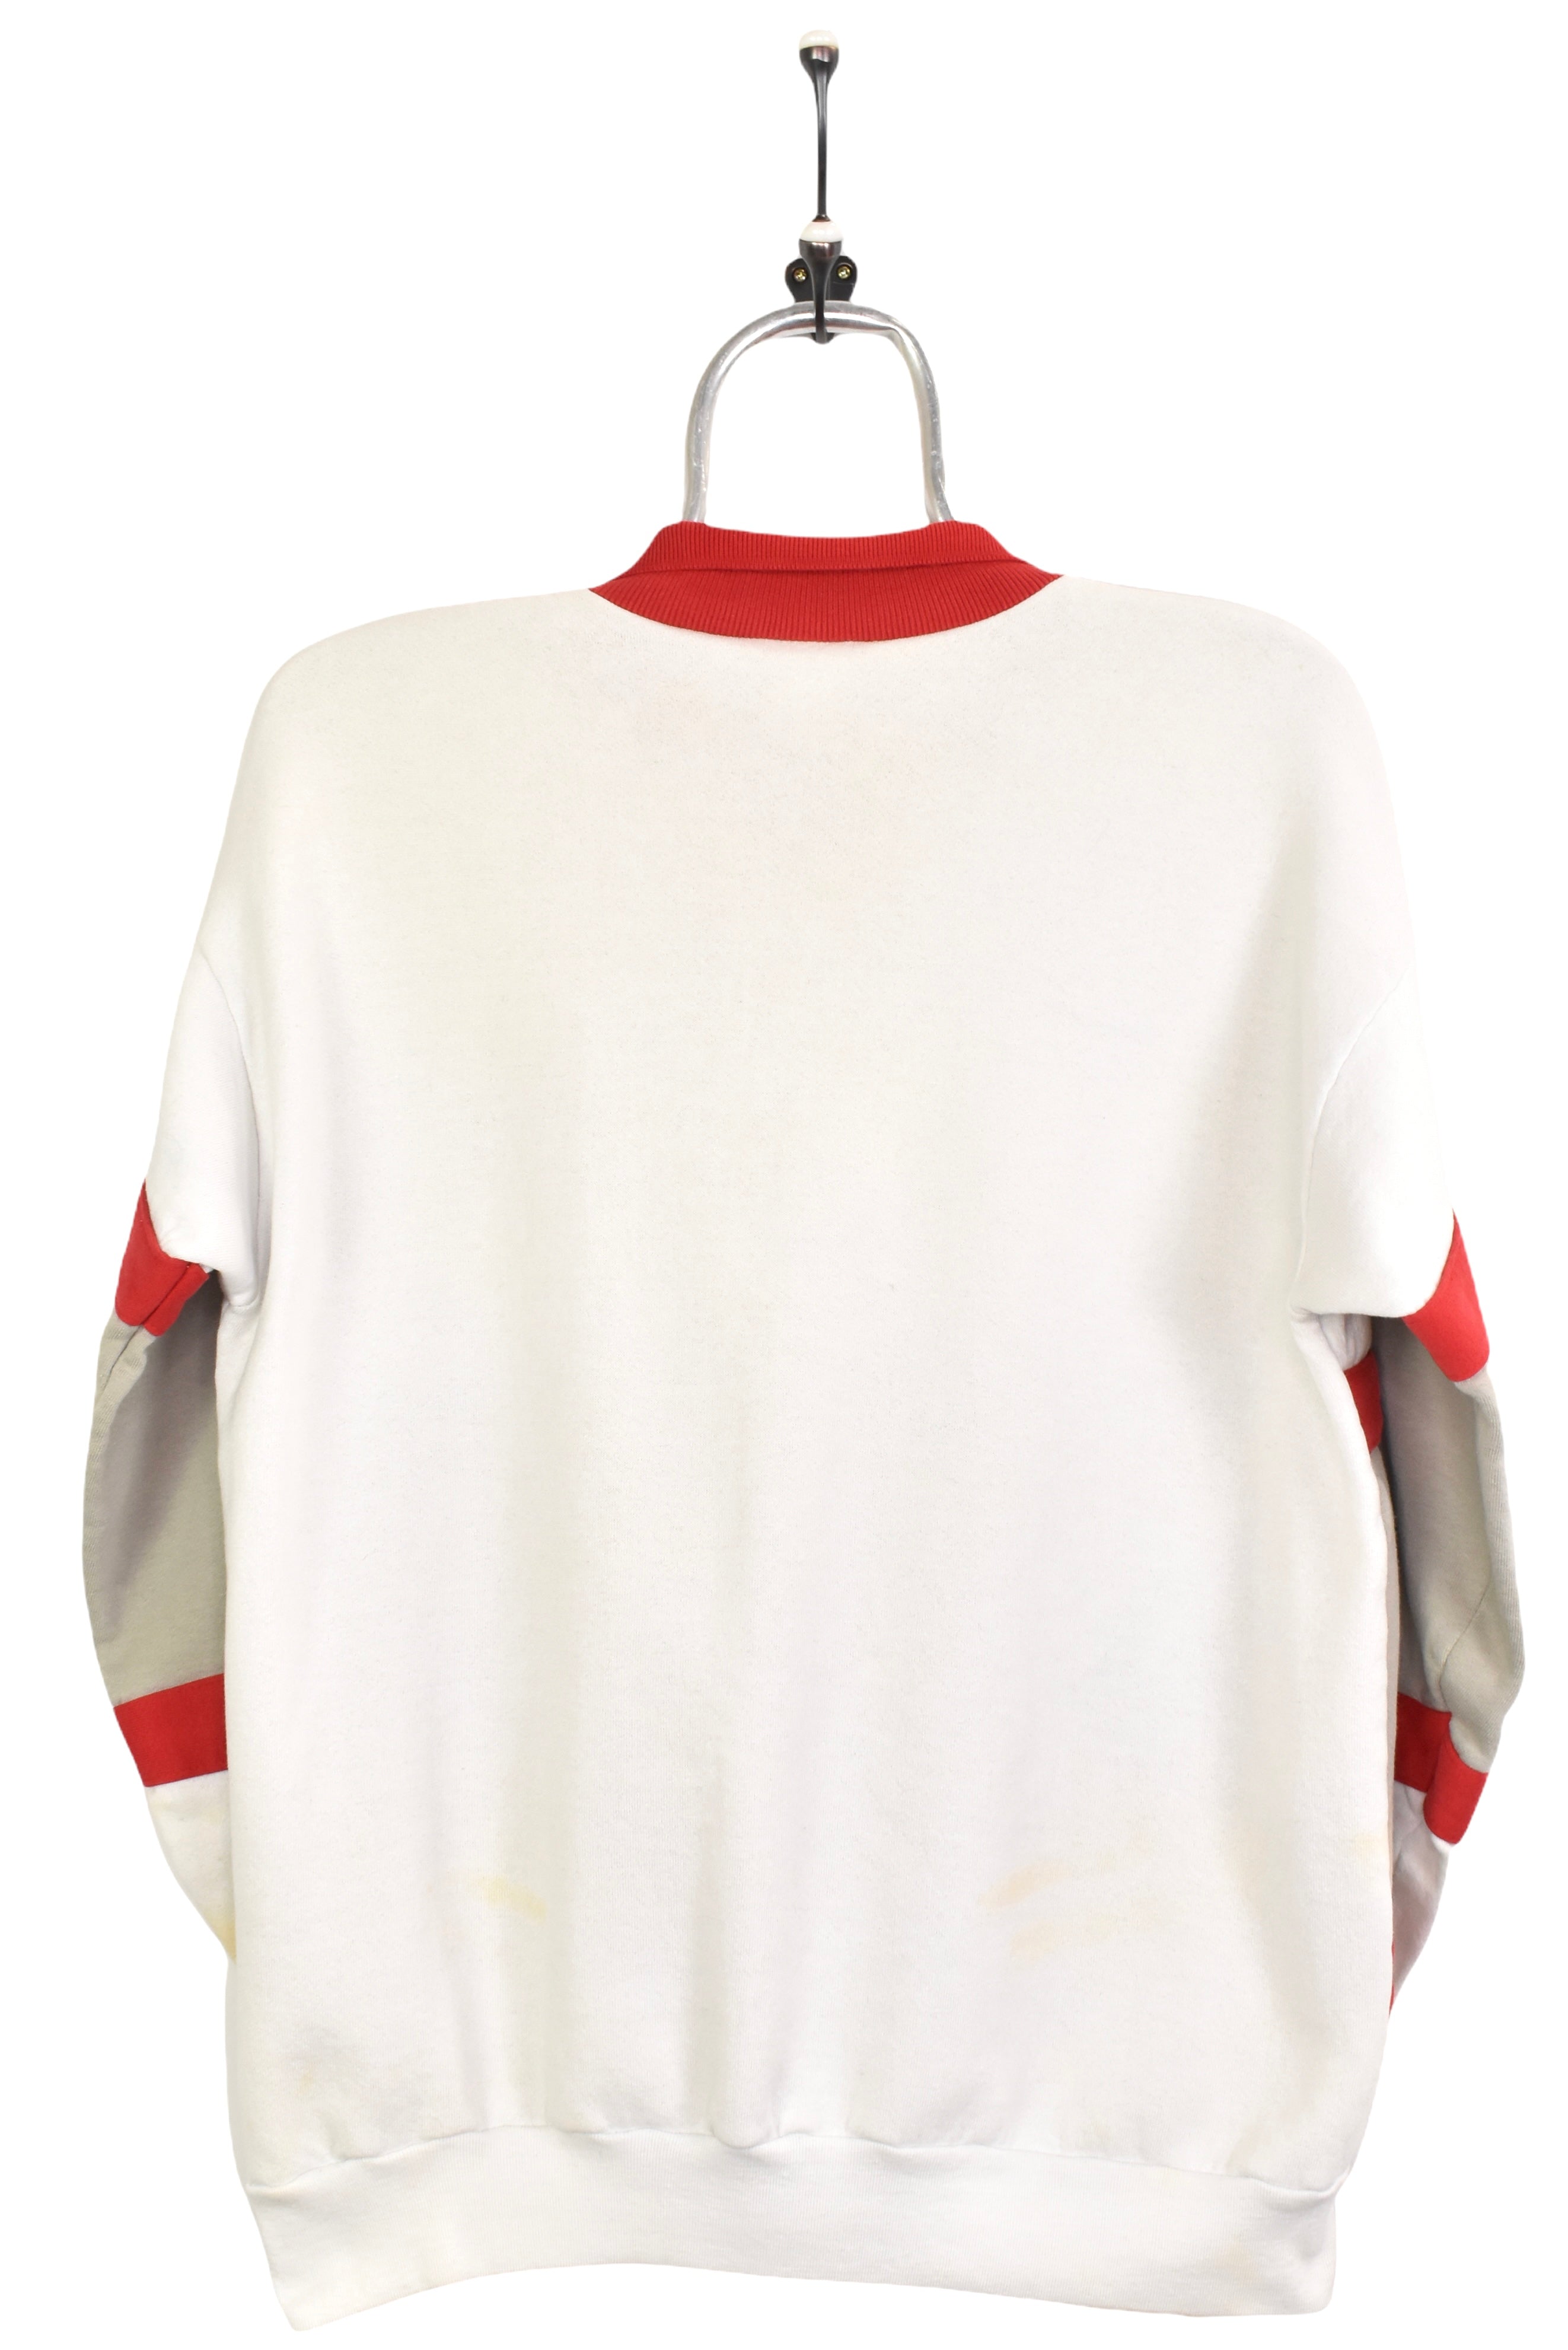 Vintage Ohio State University Buckeyes embroidered white sweatshirt | Medium COLLEGE